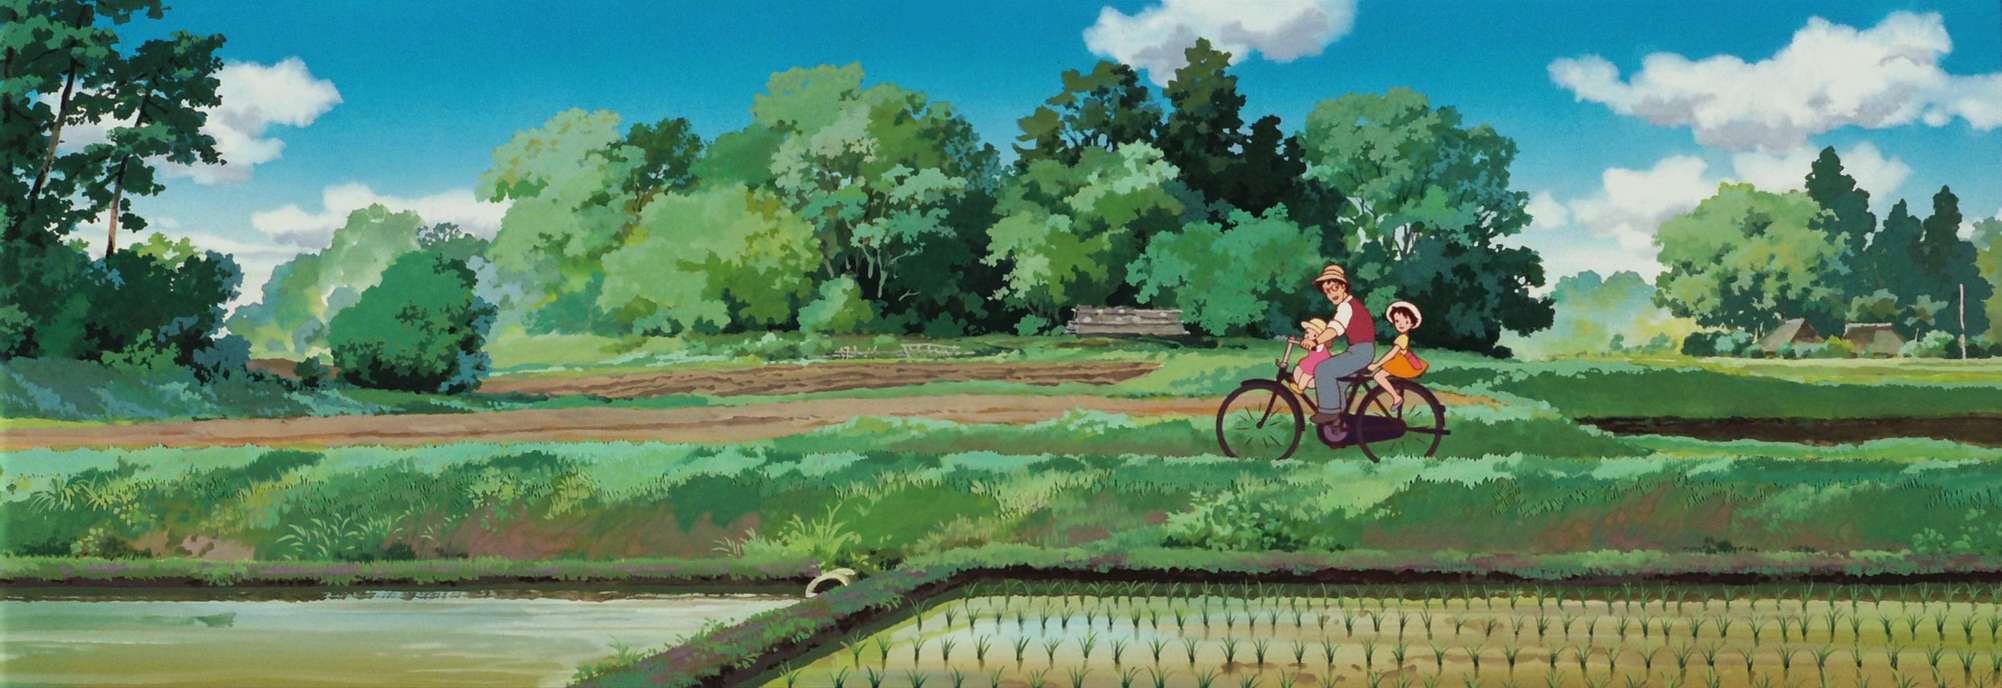 Stunning Studio Ghibli Scene